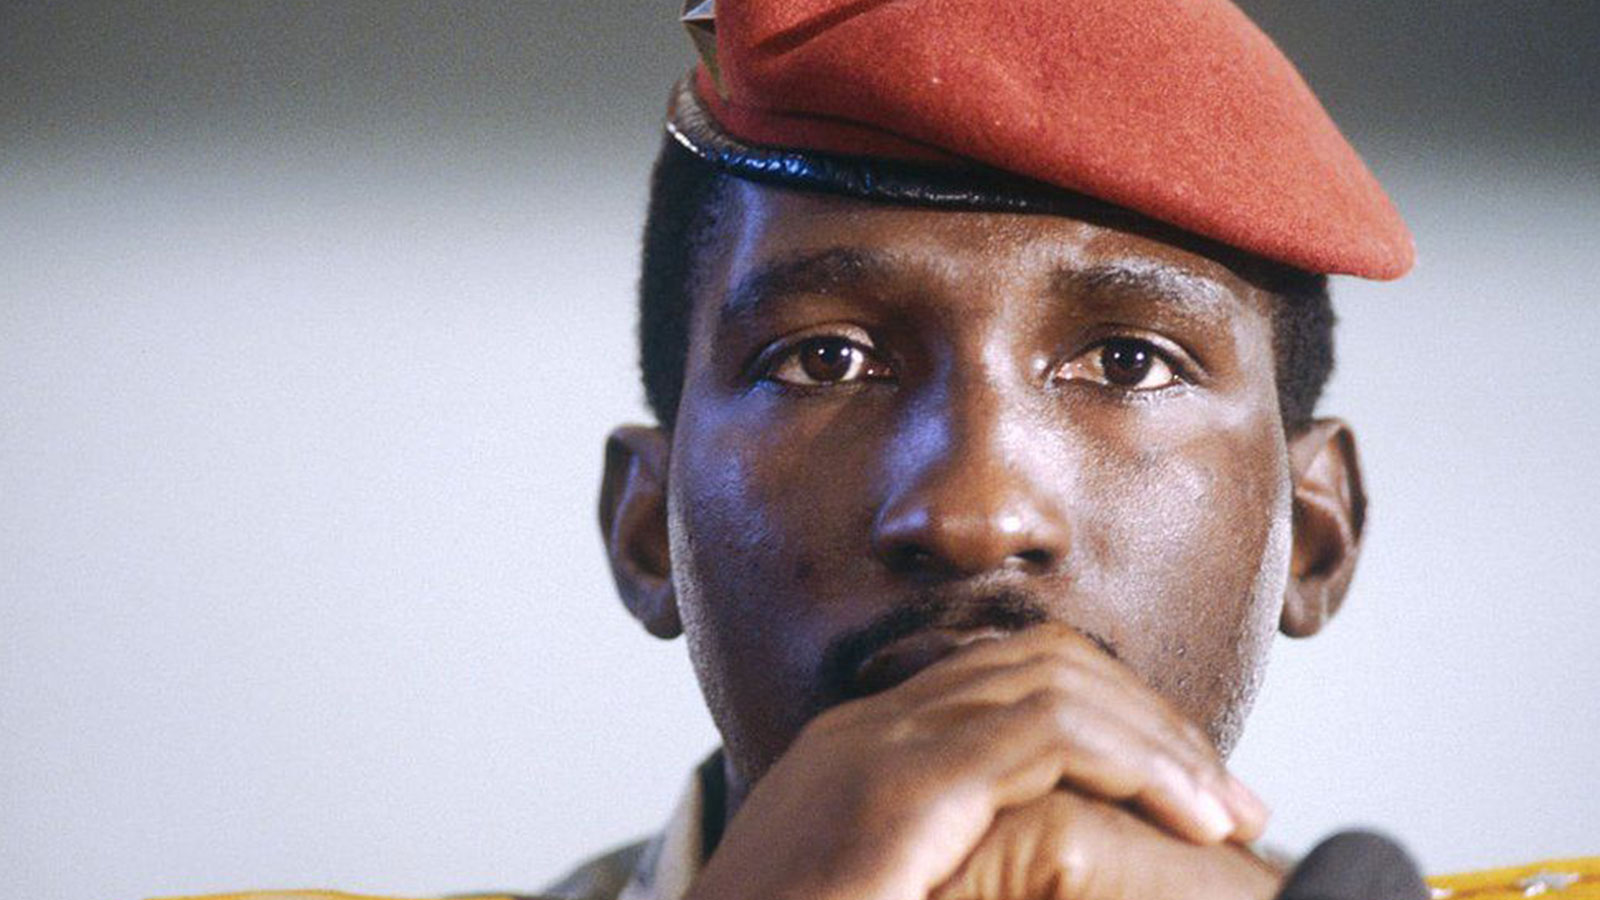 Thomas Sankara trial in Burkina Faso: Who killed ‘Africa’s Che Guevara’?